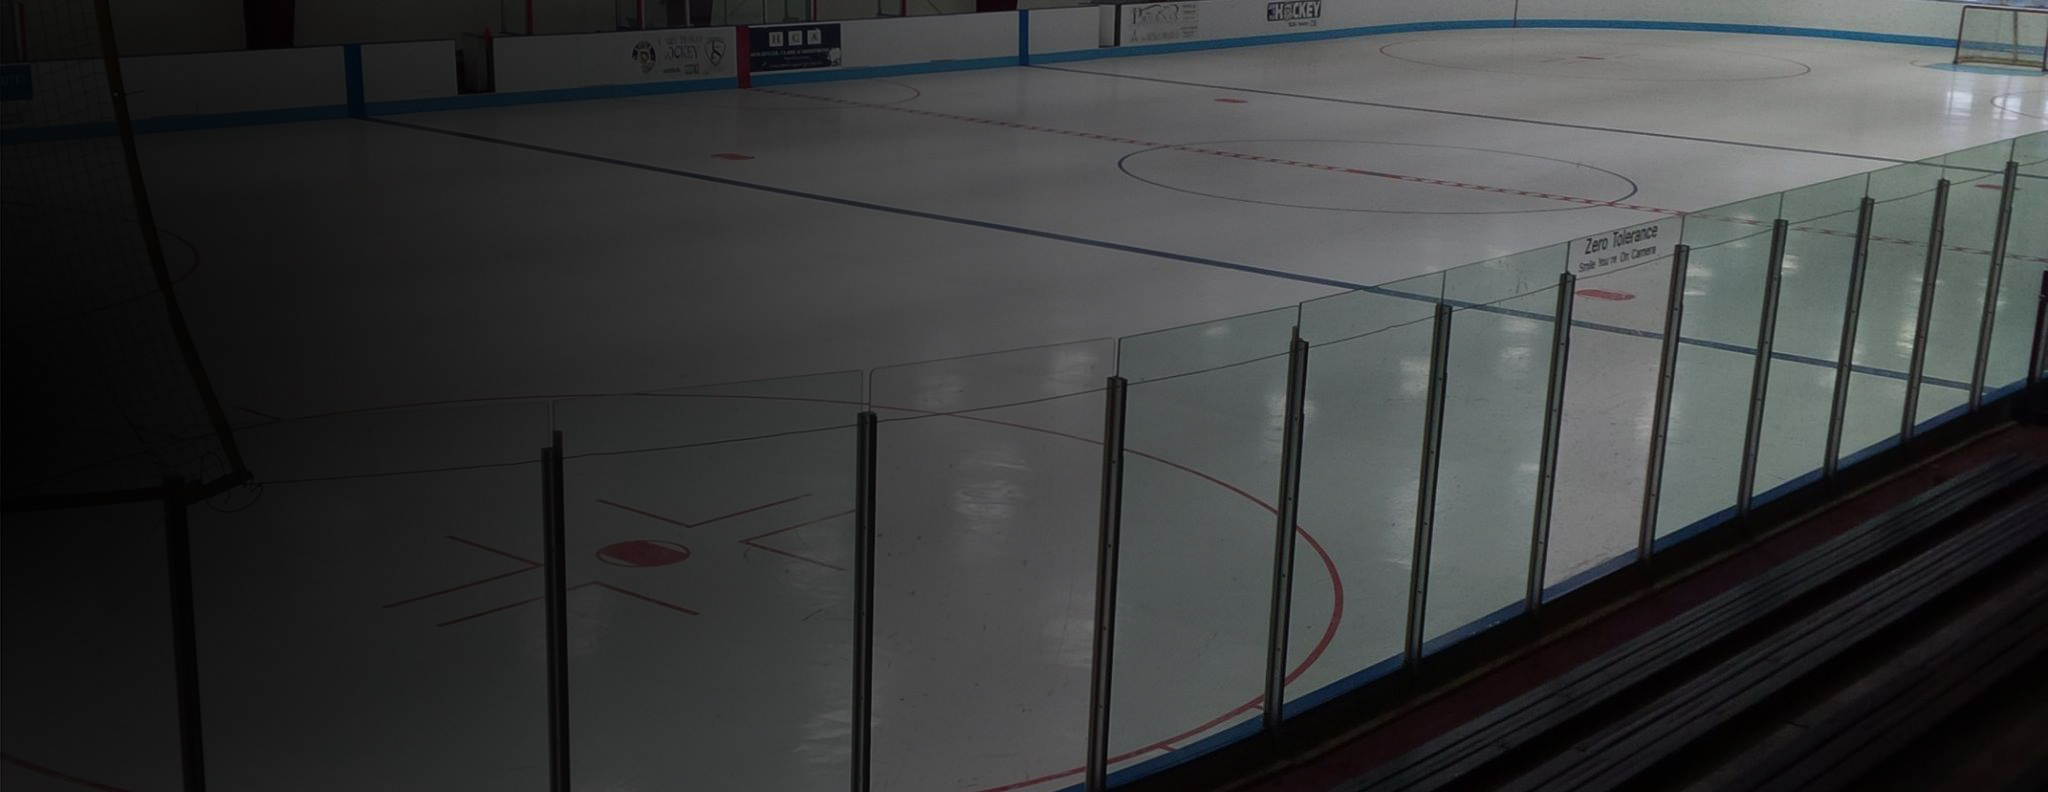 White Township Recreation S&T Arena - Hockey Shop